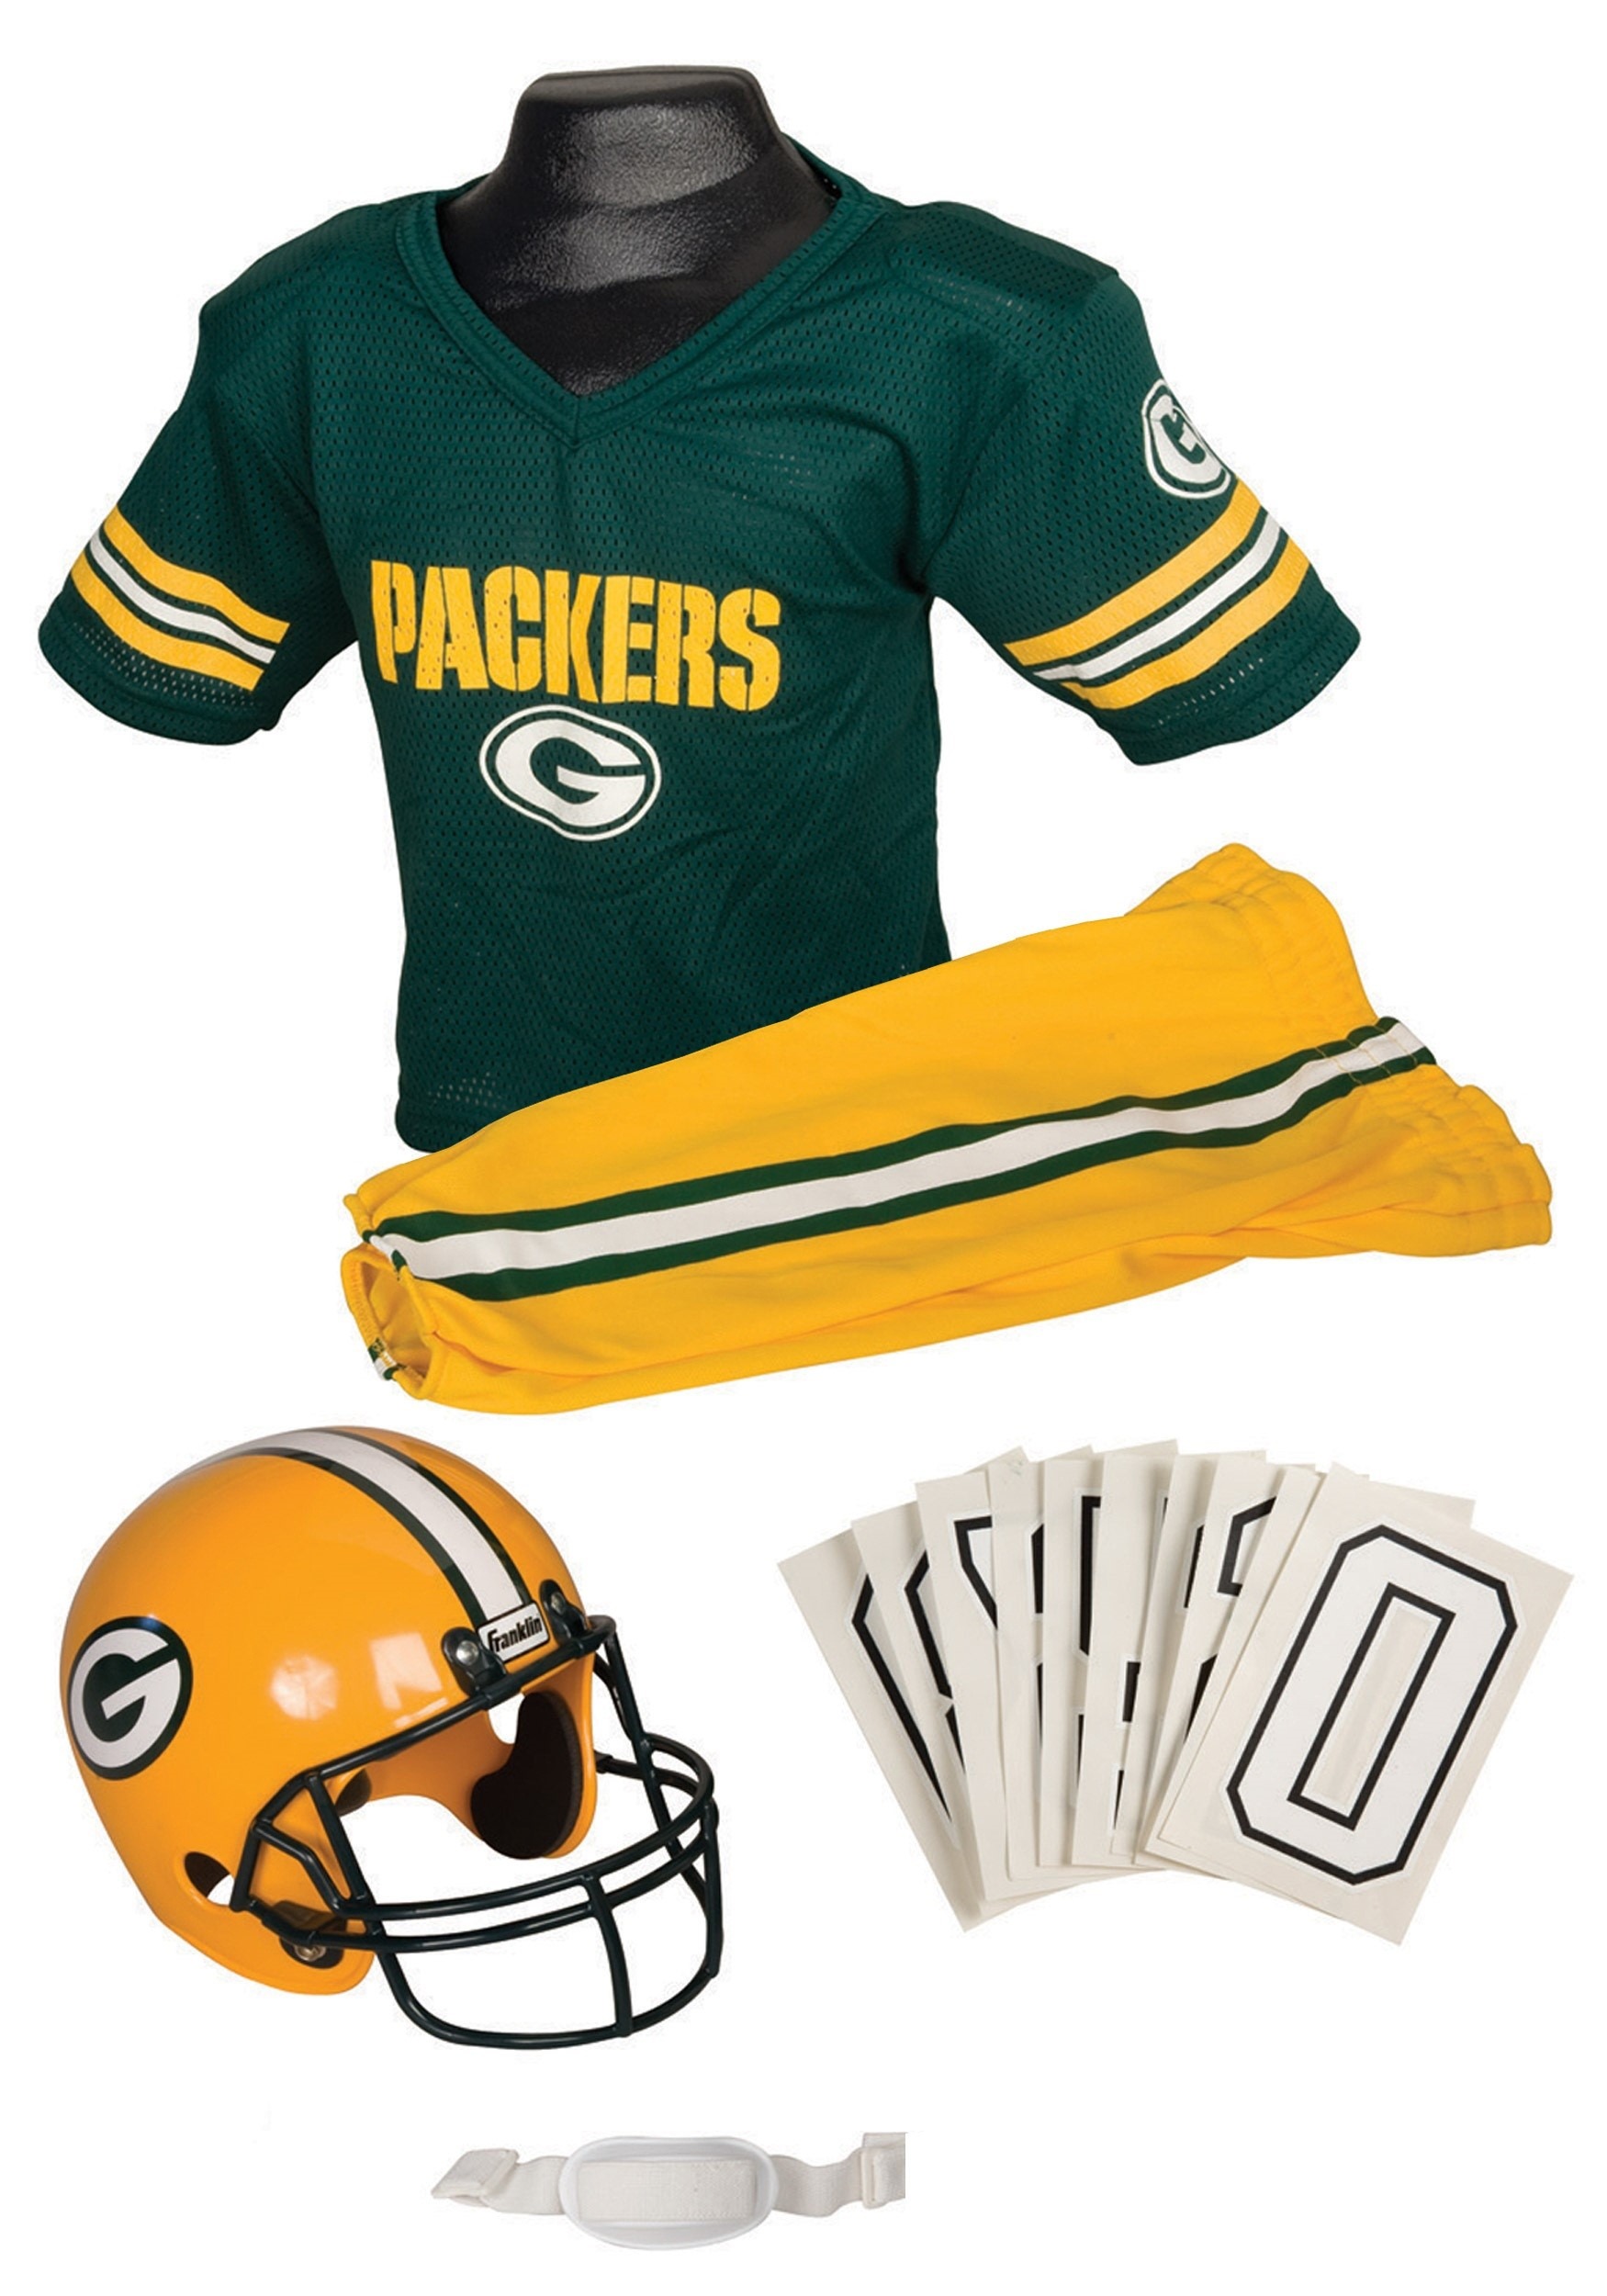 Kid's NFL Packers Uniform Costume